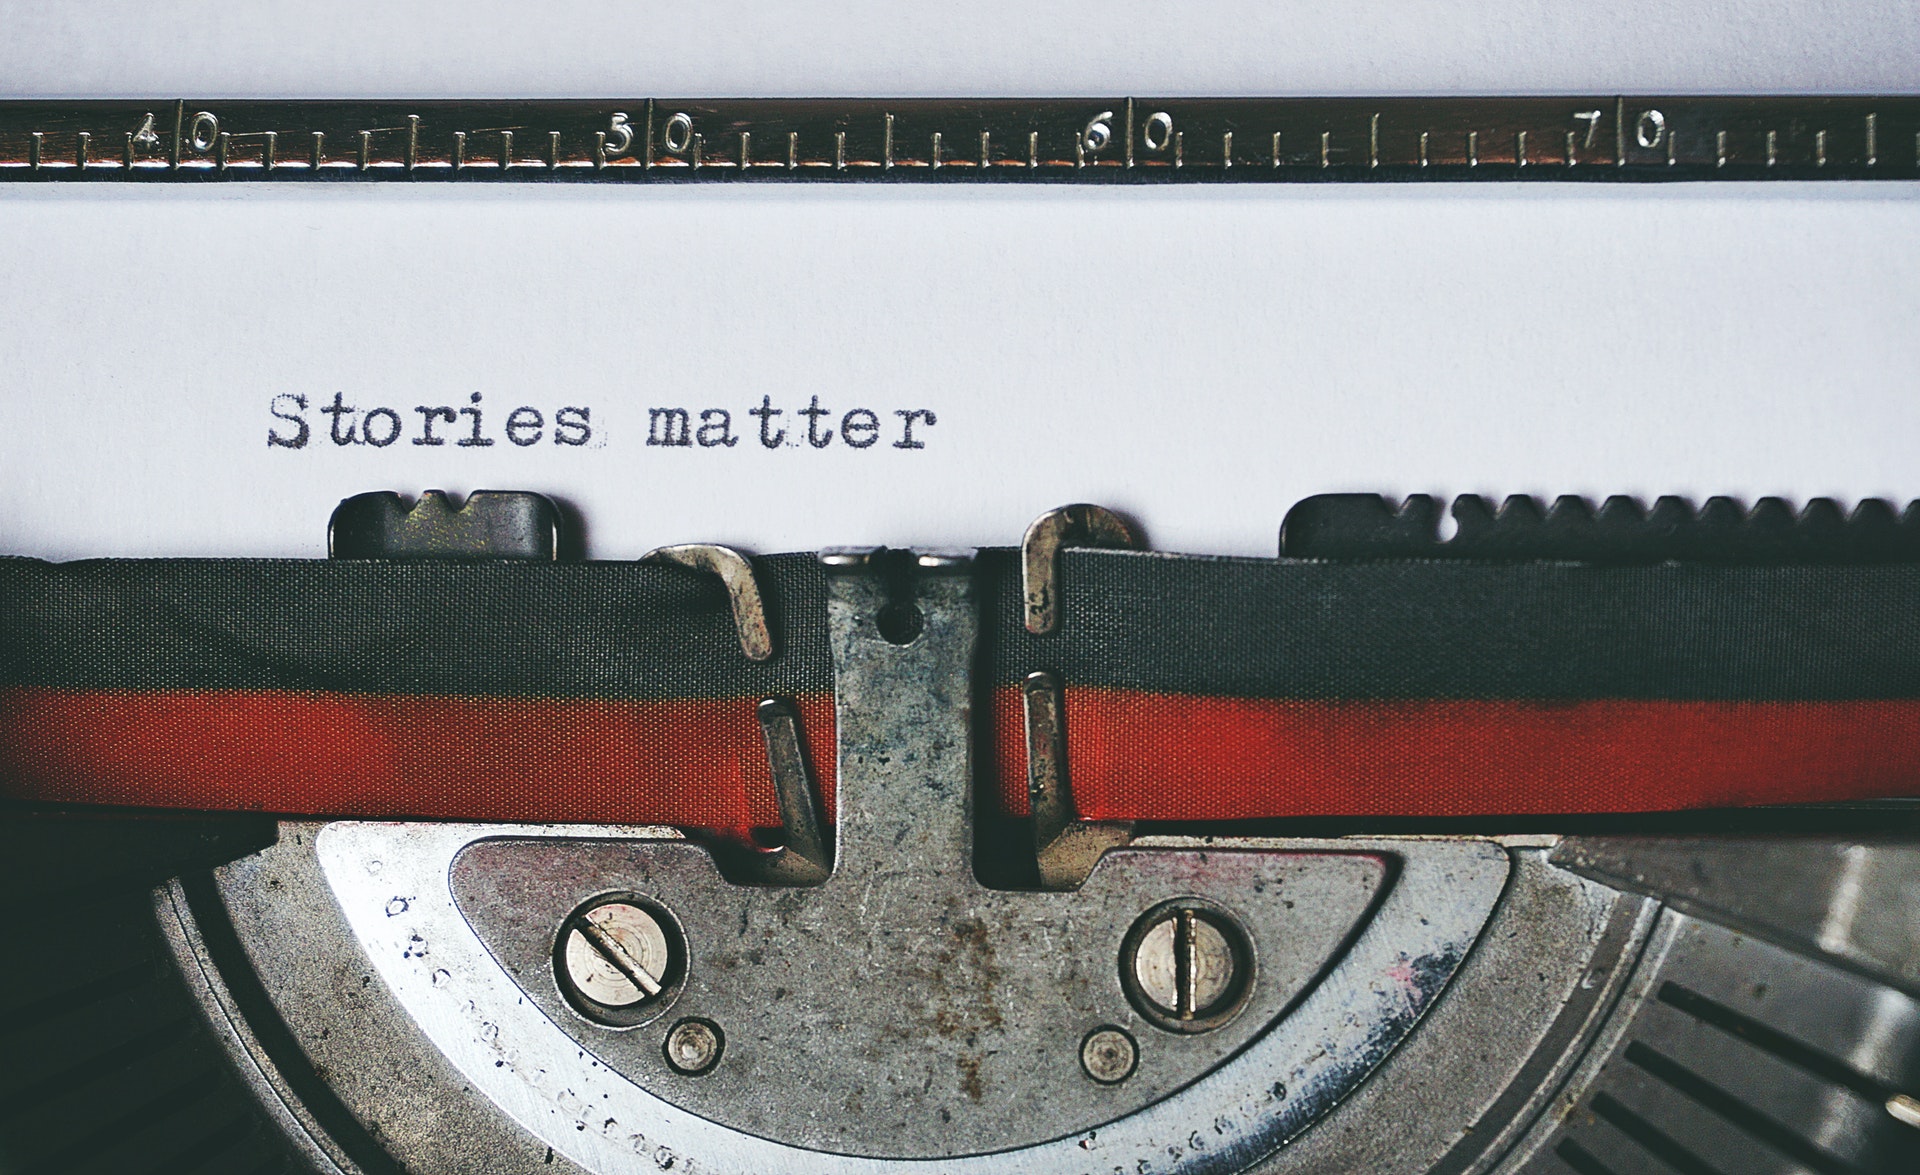 Stories matter written out on a typewriter.